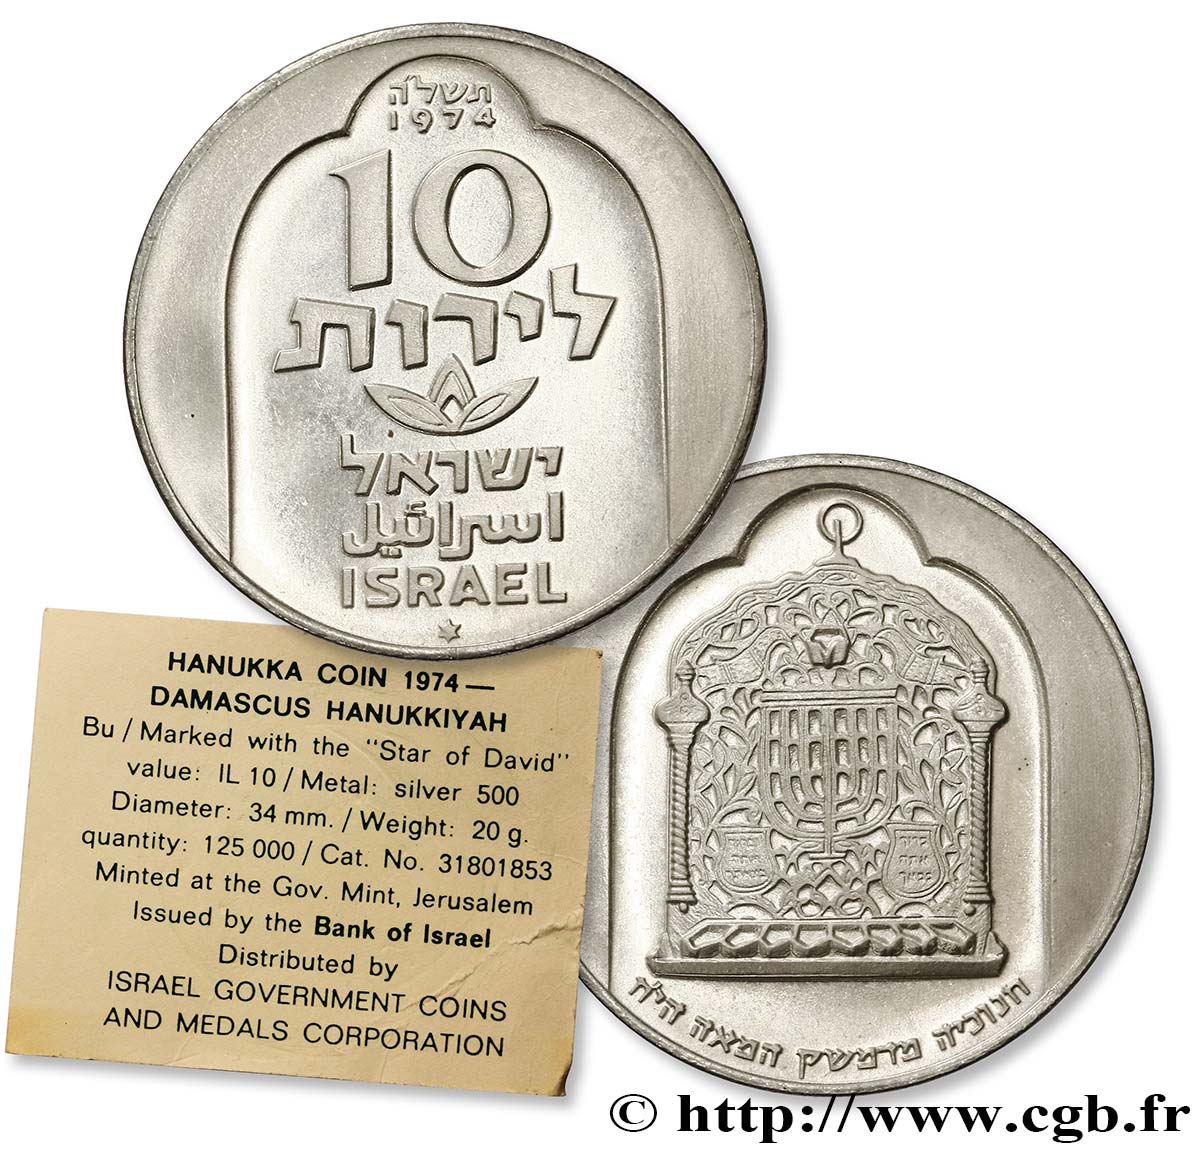 ISRAEL 10 Lirot Proof Hanukka Lampe de Damas variété avec étoile de David 1974  ST 